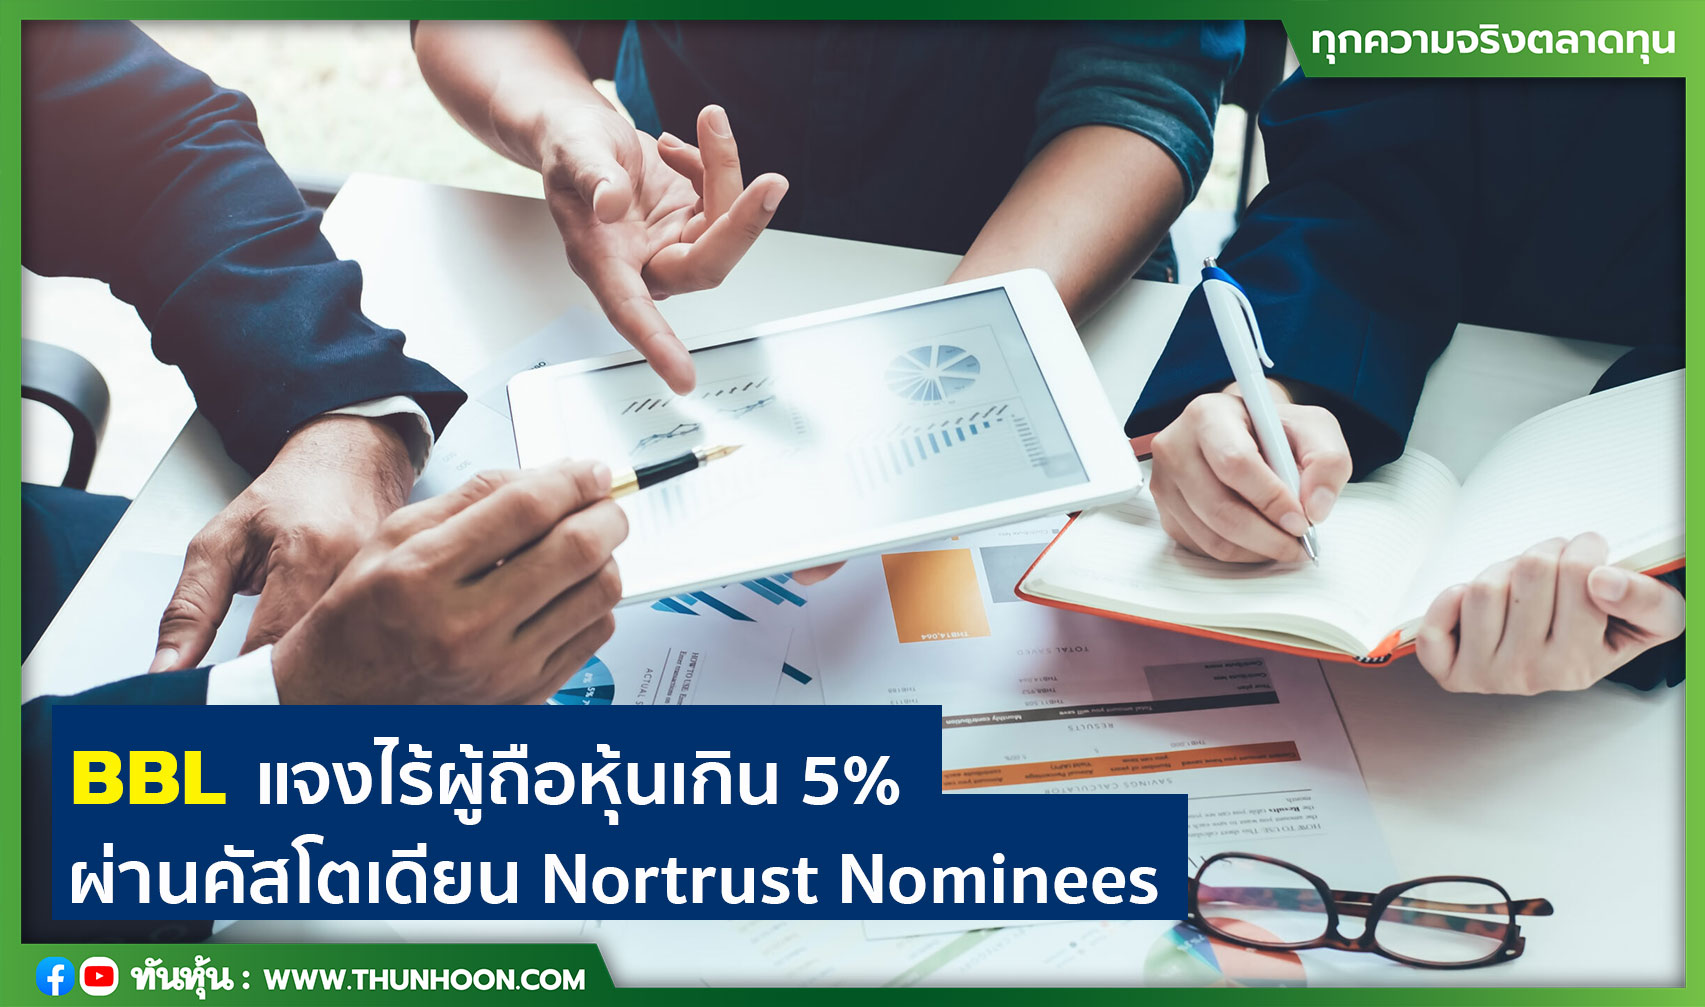 BBL แจงไม่มีผู้ใดถือหุ้นเกิน 5% ผ่านคัสโตเดียน Nortrust Nominees